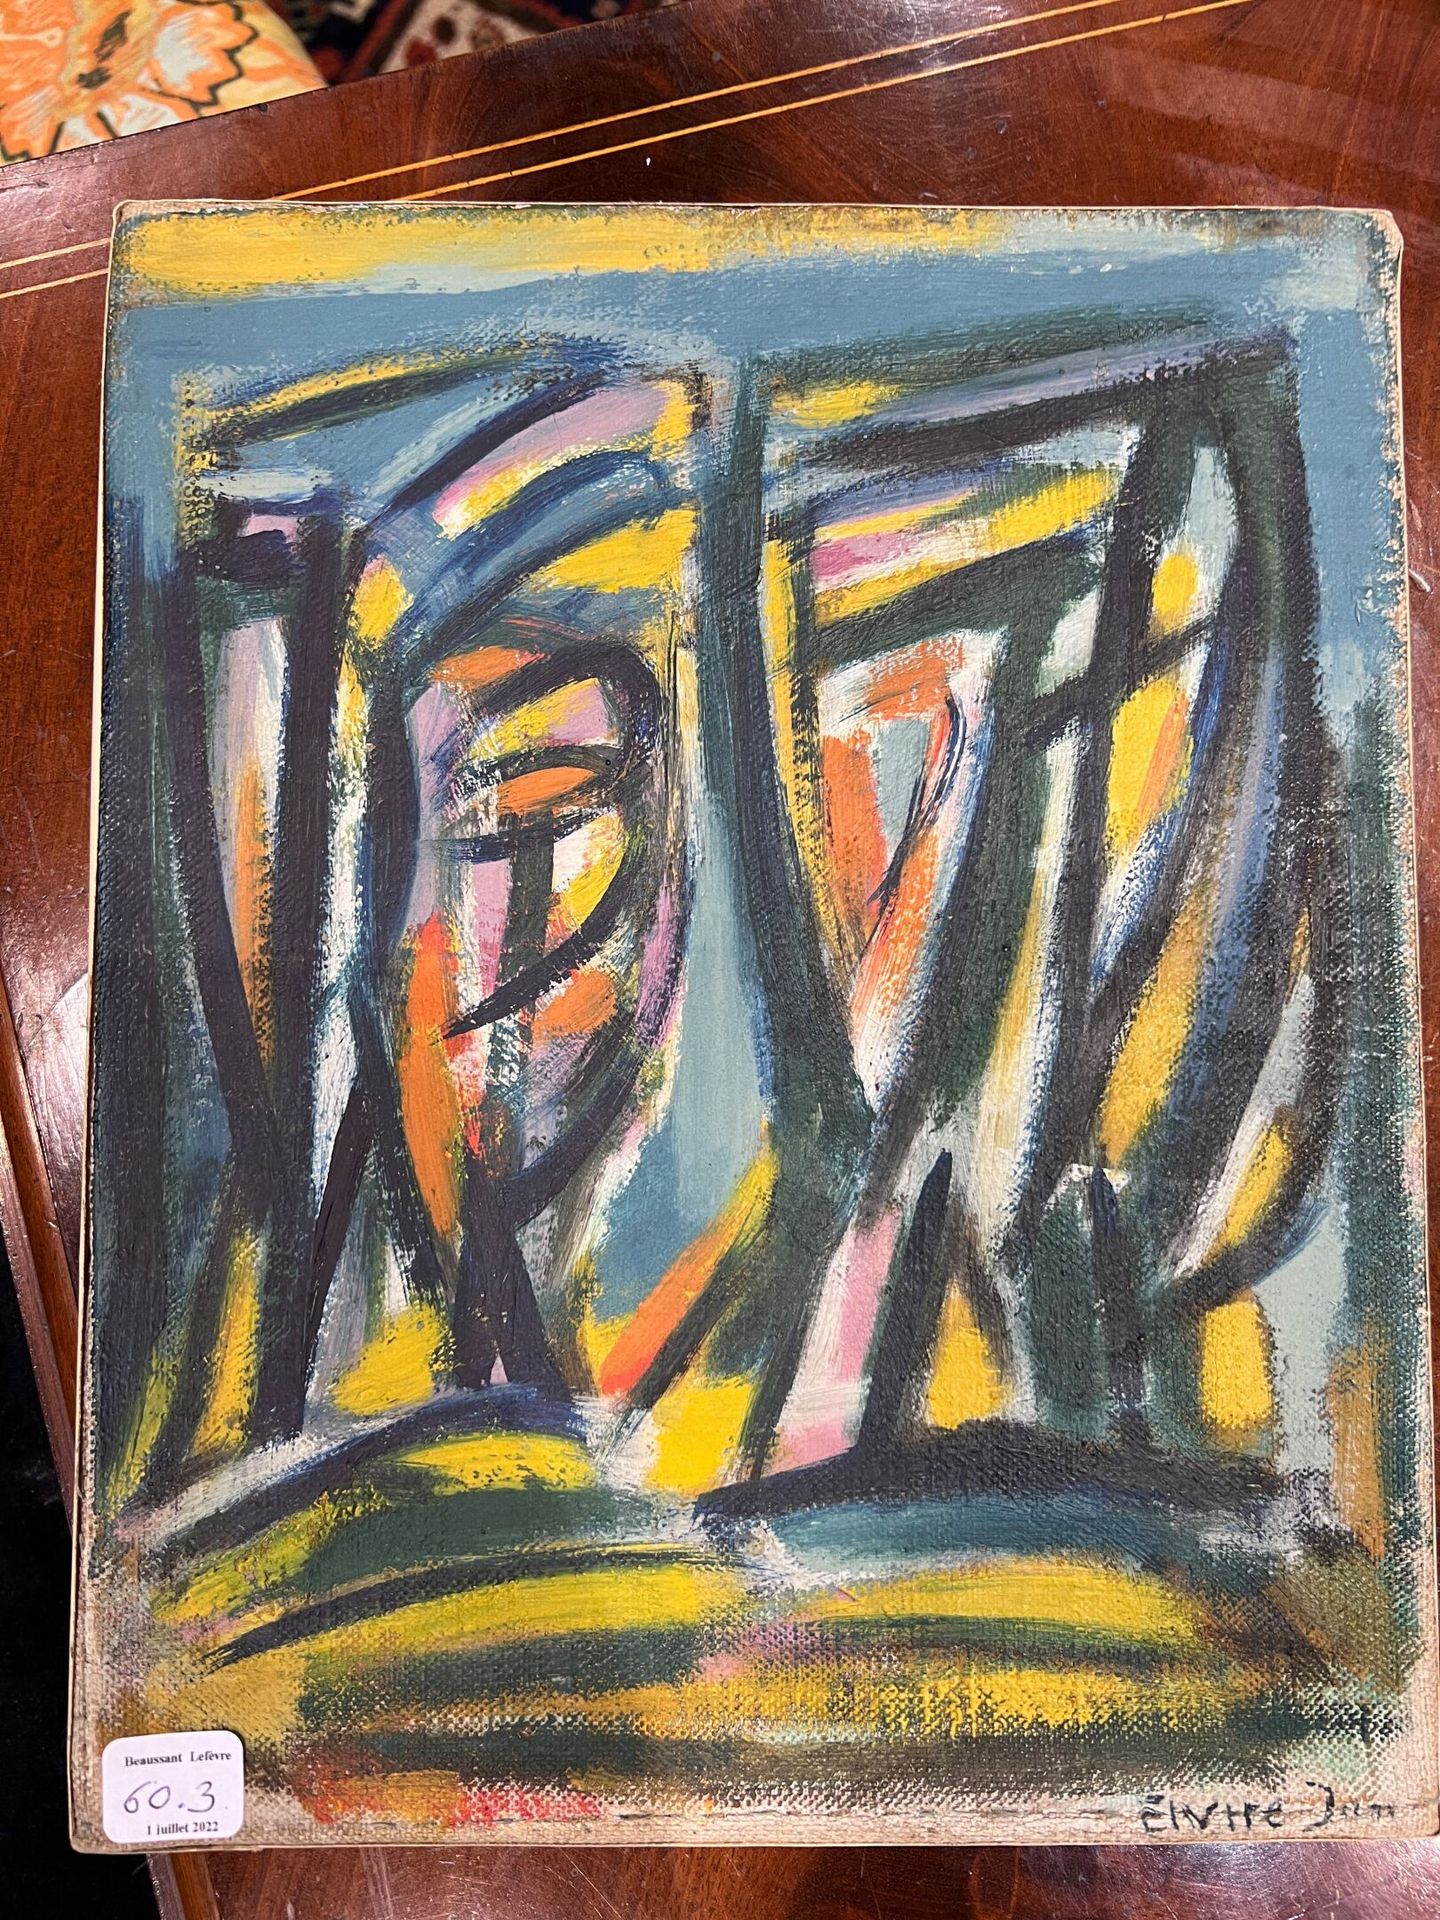 Null Elvire JAN.

"Abstract face".

Oil on canvas 28 x 22 cm.